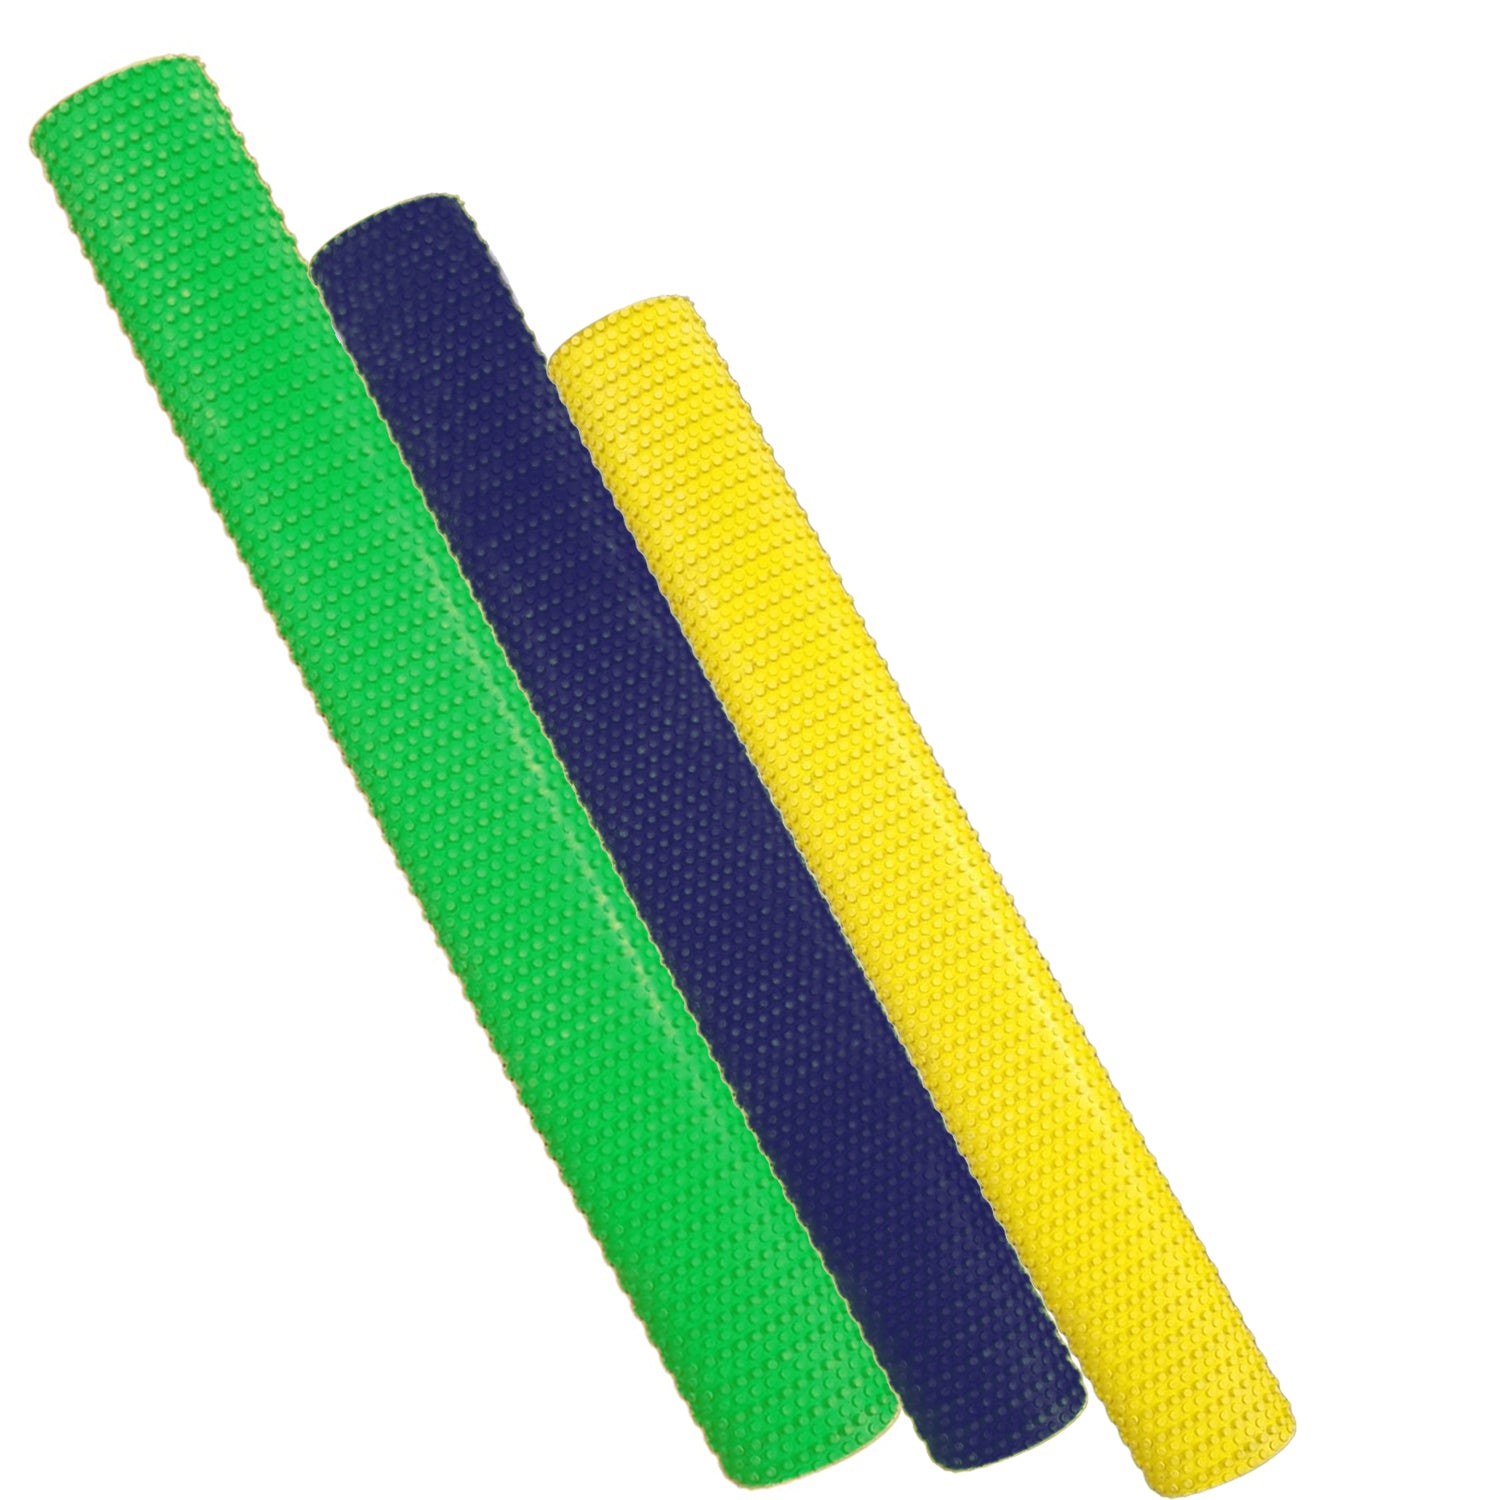 Prokick Cricket Bat Grip, Dotted (Assorted Color) - Best Price online Prokicksports.com